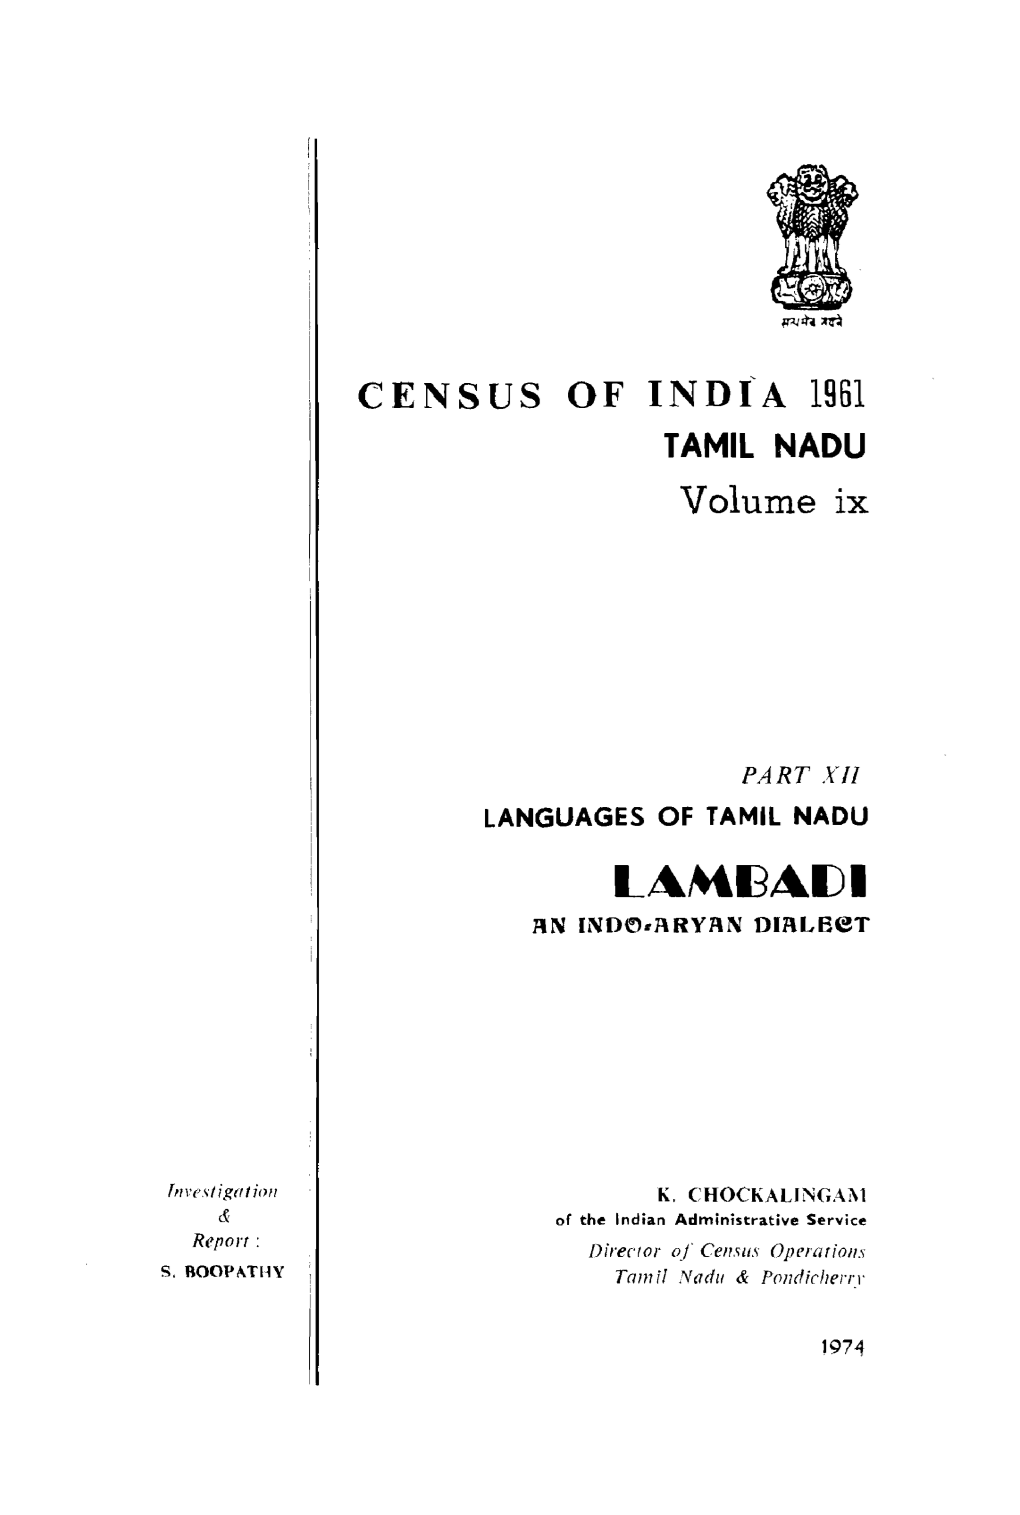 Languages of Tamil Nadu Lambadi an Indo-Aryan Dialect, Part XII, Vol-IX